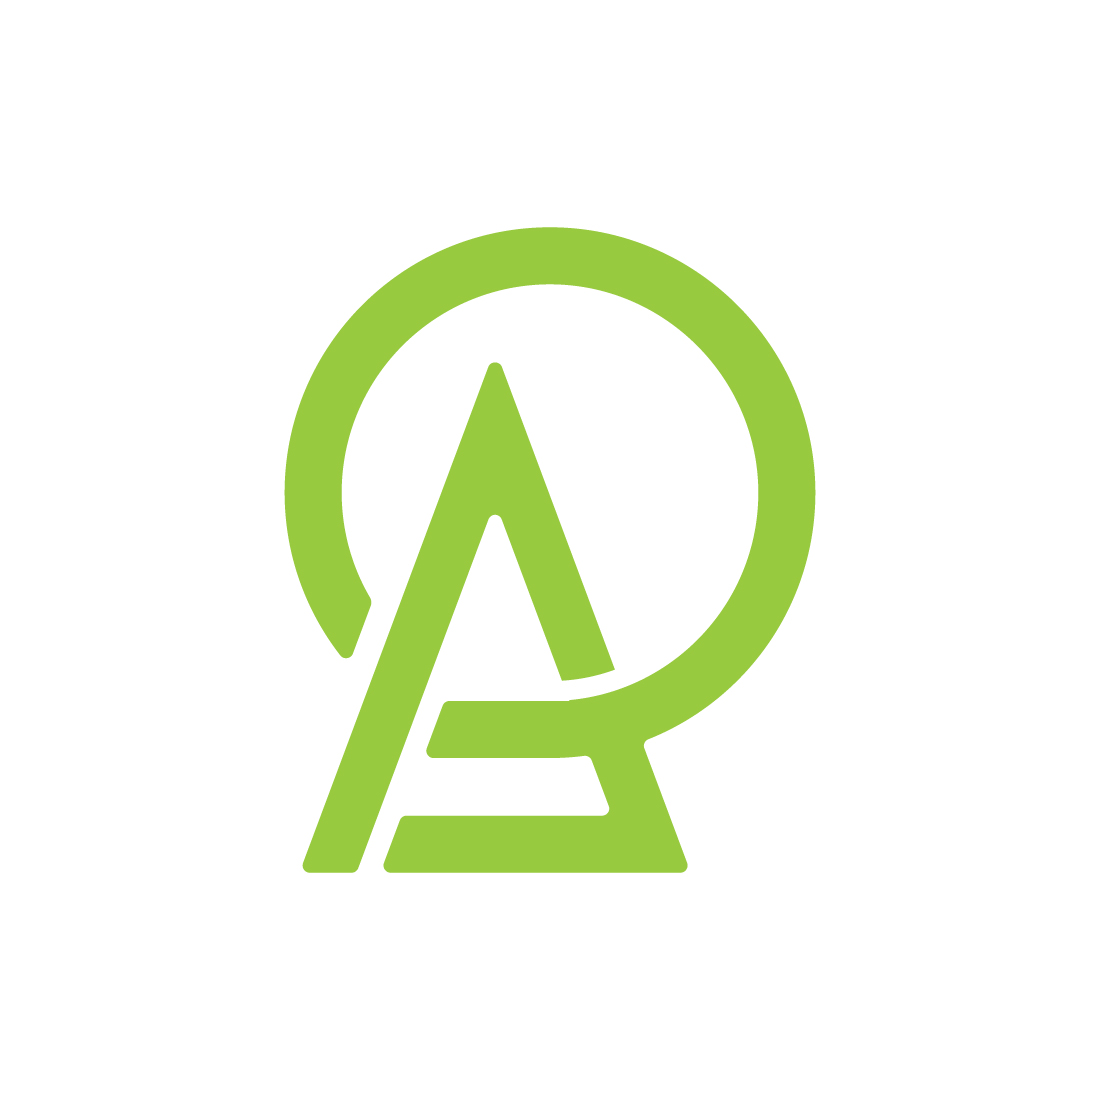 a letter logo1 677